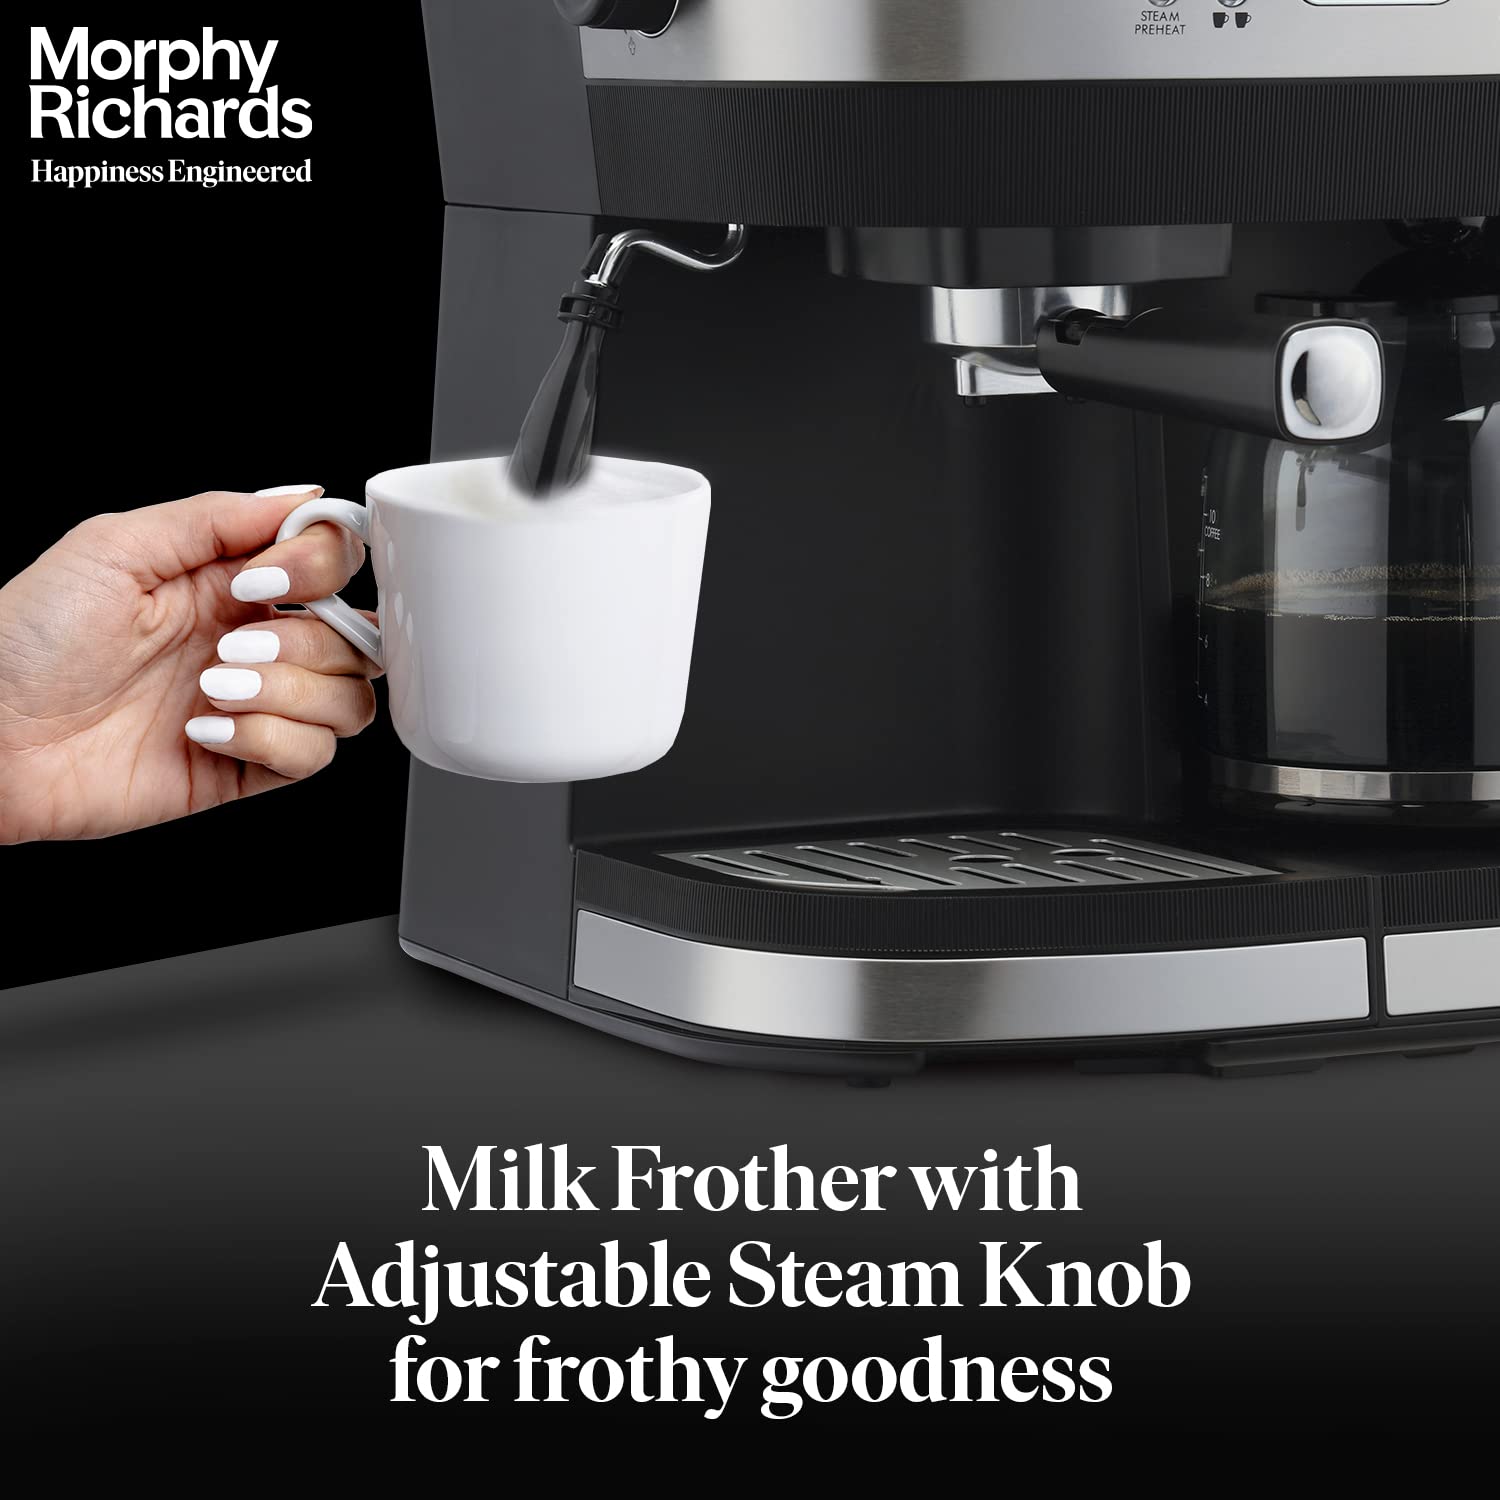 Morphy Richards DuoPresso 2-in-1 Coffee Maker|Drip & Espresso| 15 bar Pressure| Digital Display|Removable Drip Tray| Upto 10 cups* of Coffee| Keep Warm Tray| 2-Yr Warranty by Brand|Black